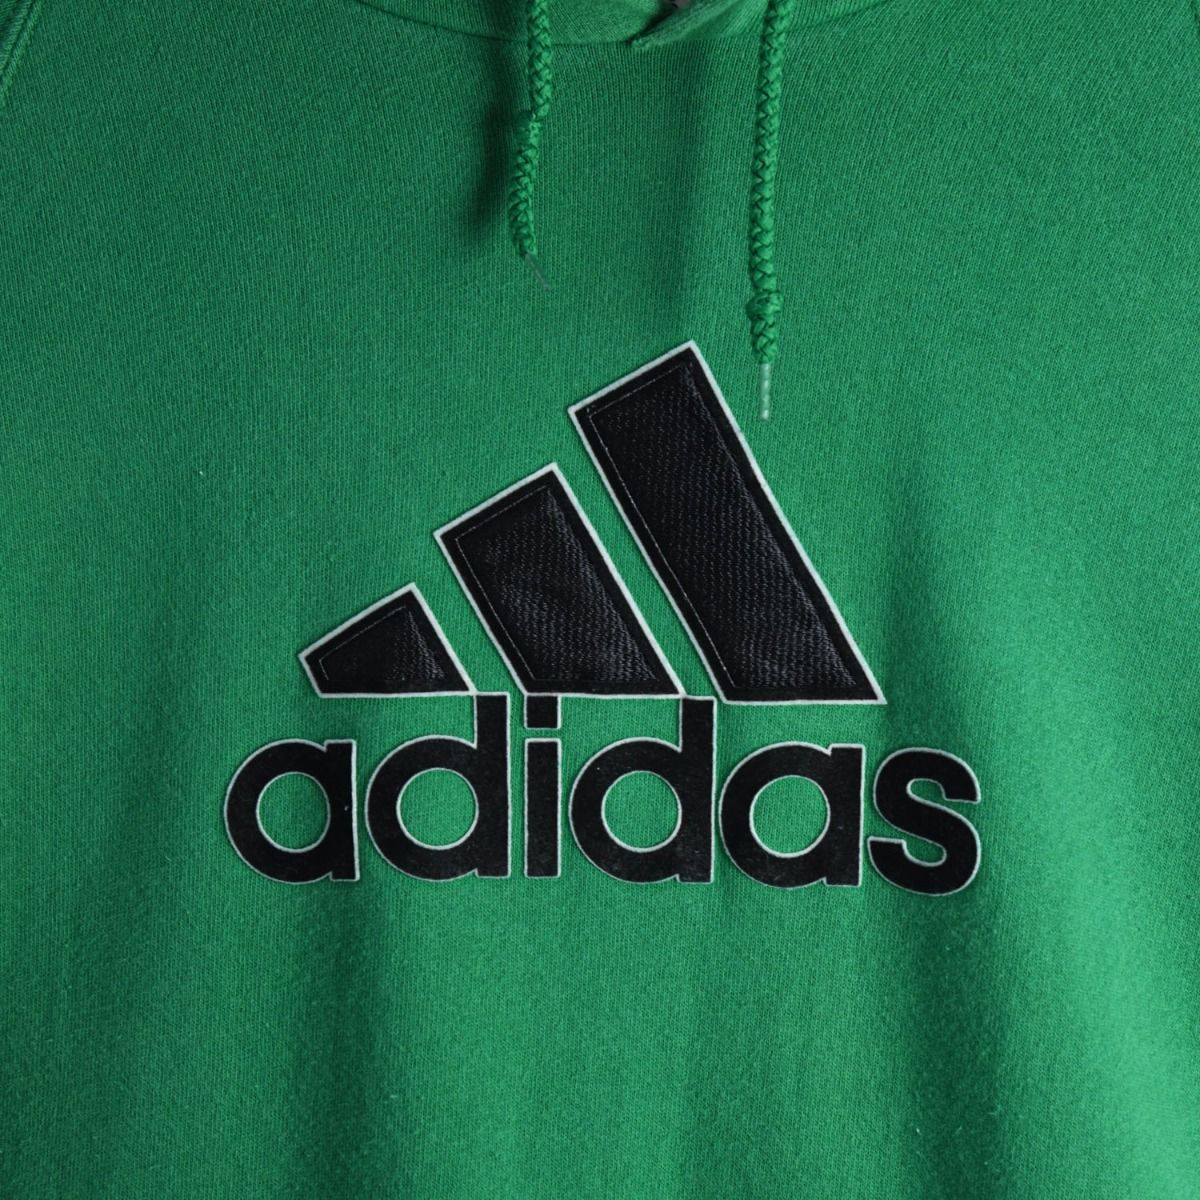 Adidas 1990s Green Hoodie